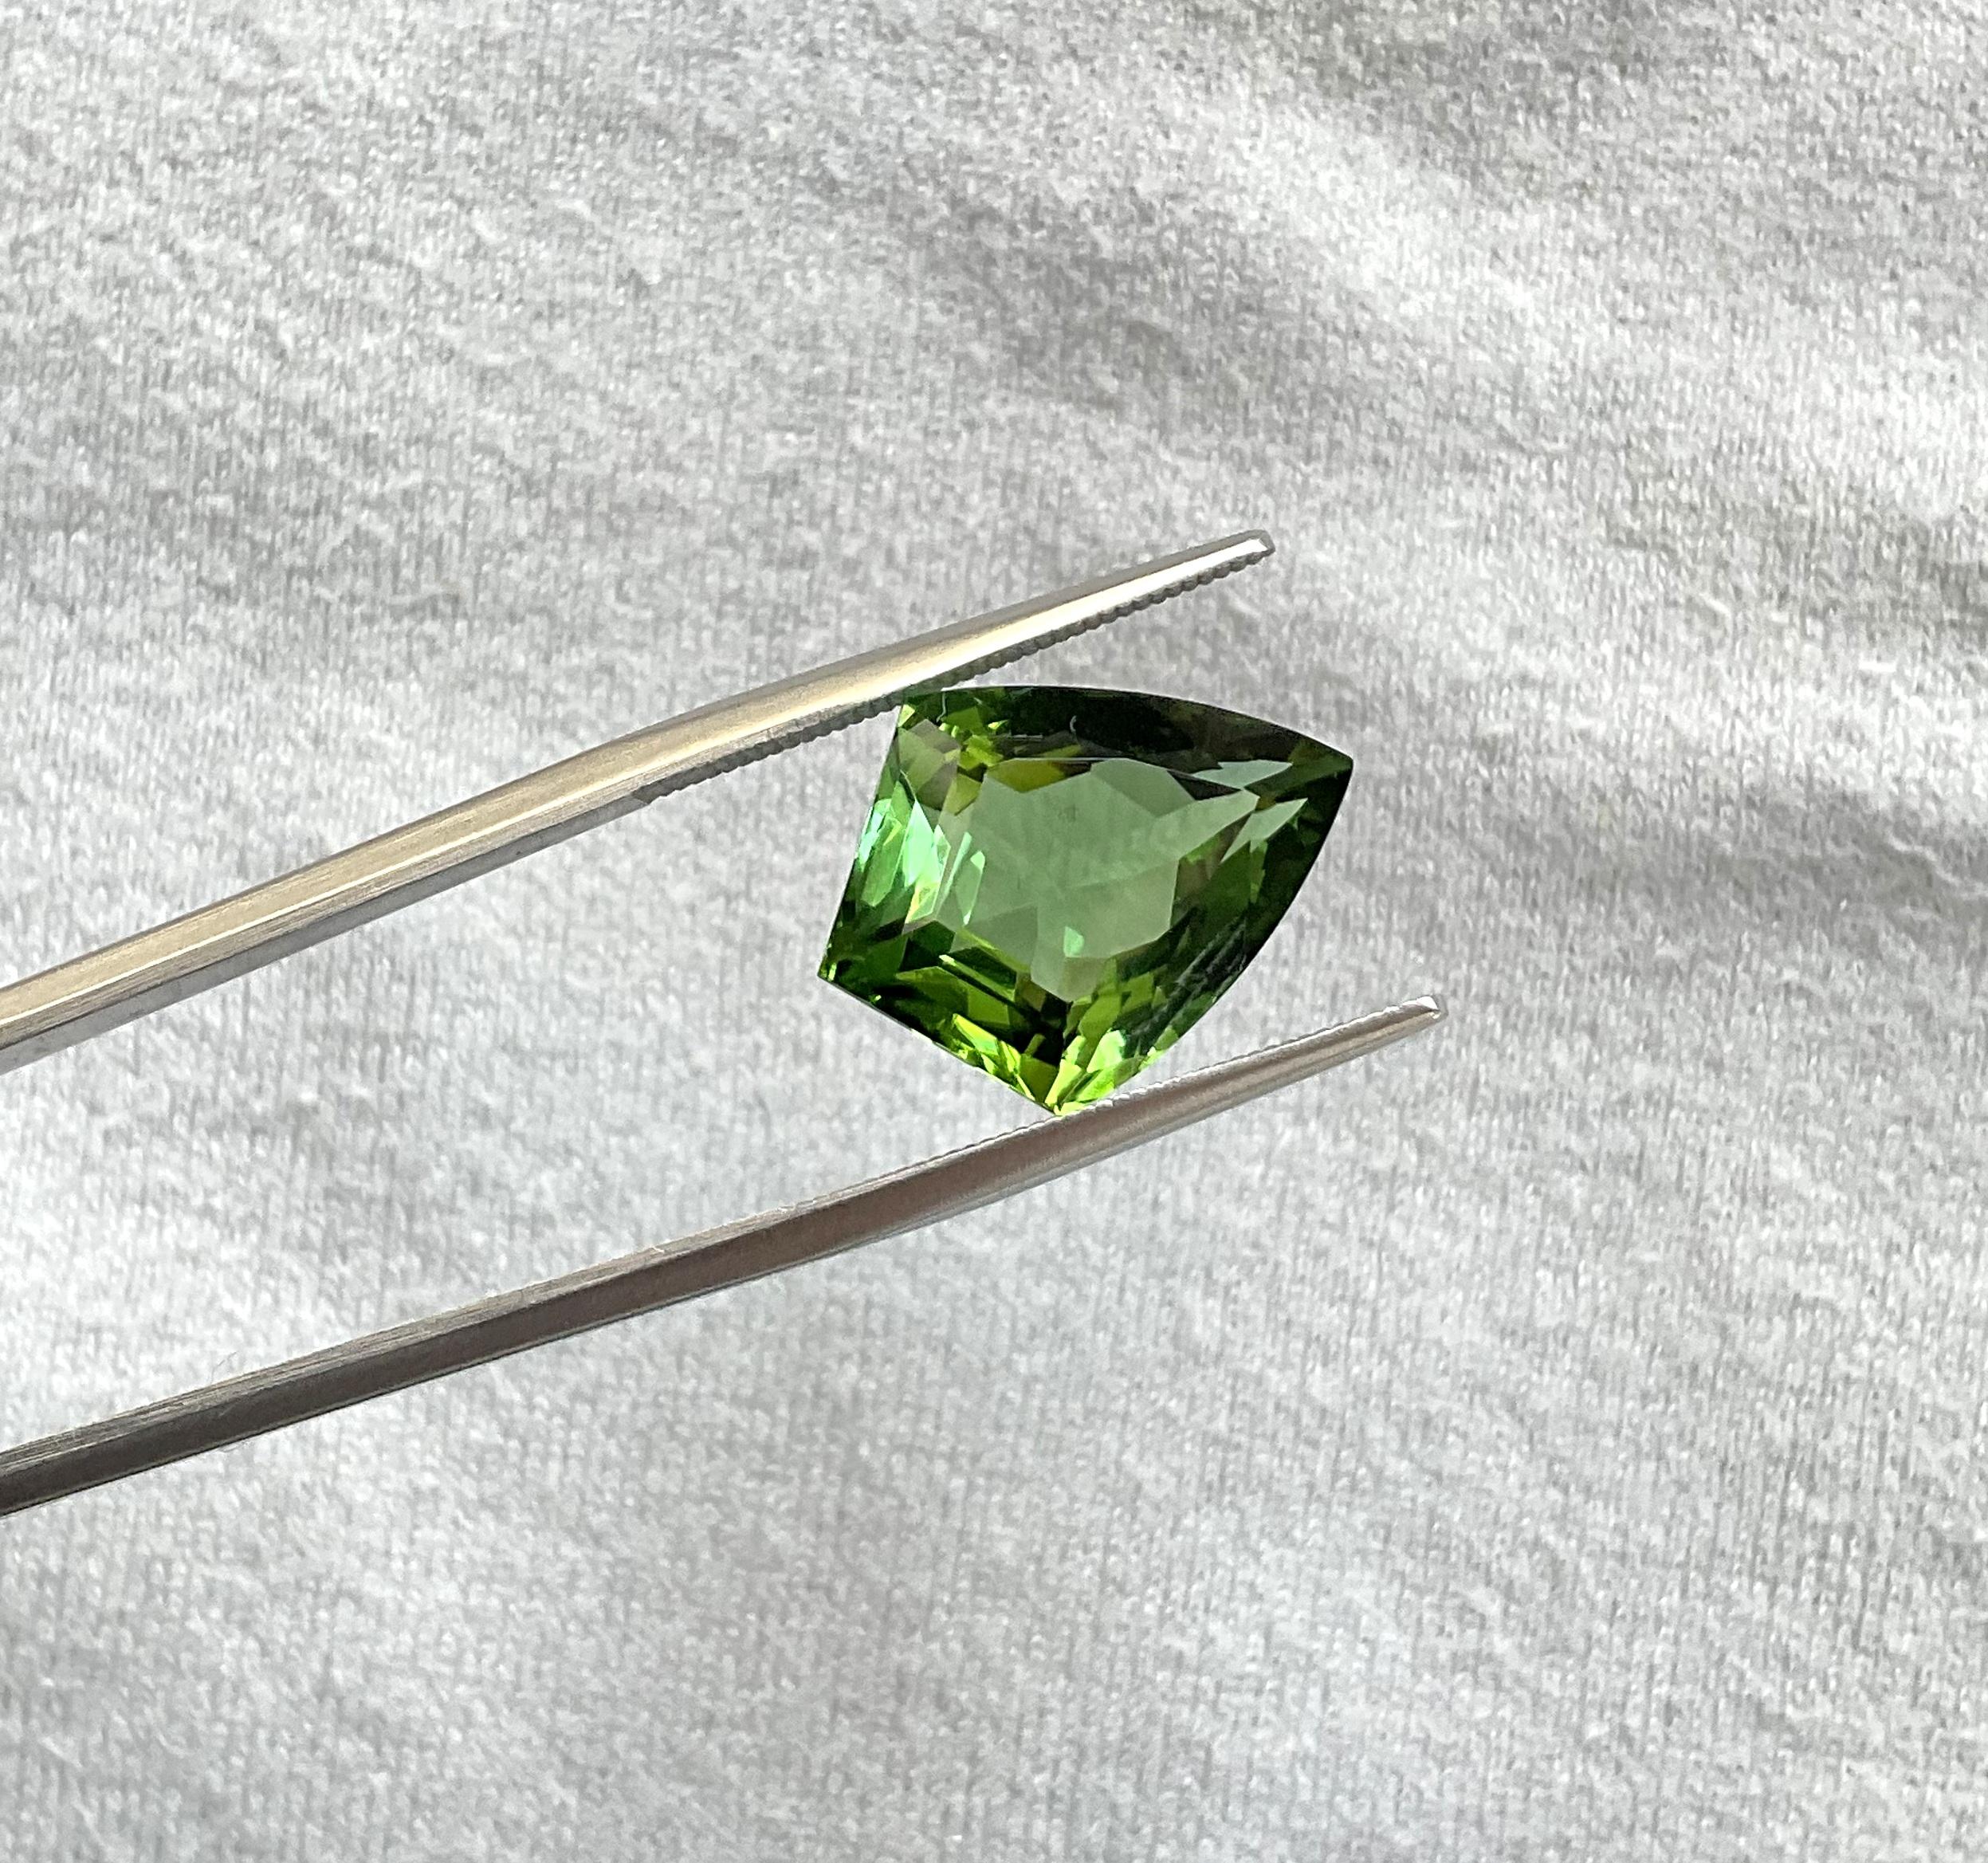 8.51 Carats Fine Green Tourmaline Shield Cutstone Fine Jewelry Natural Gemstone 2